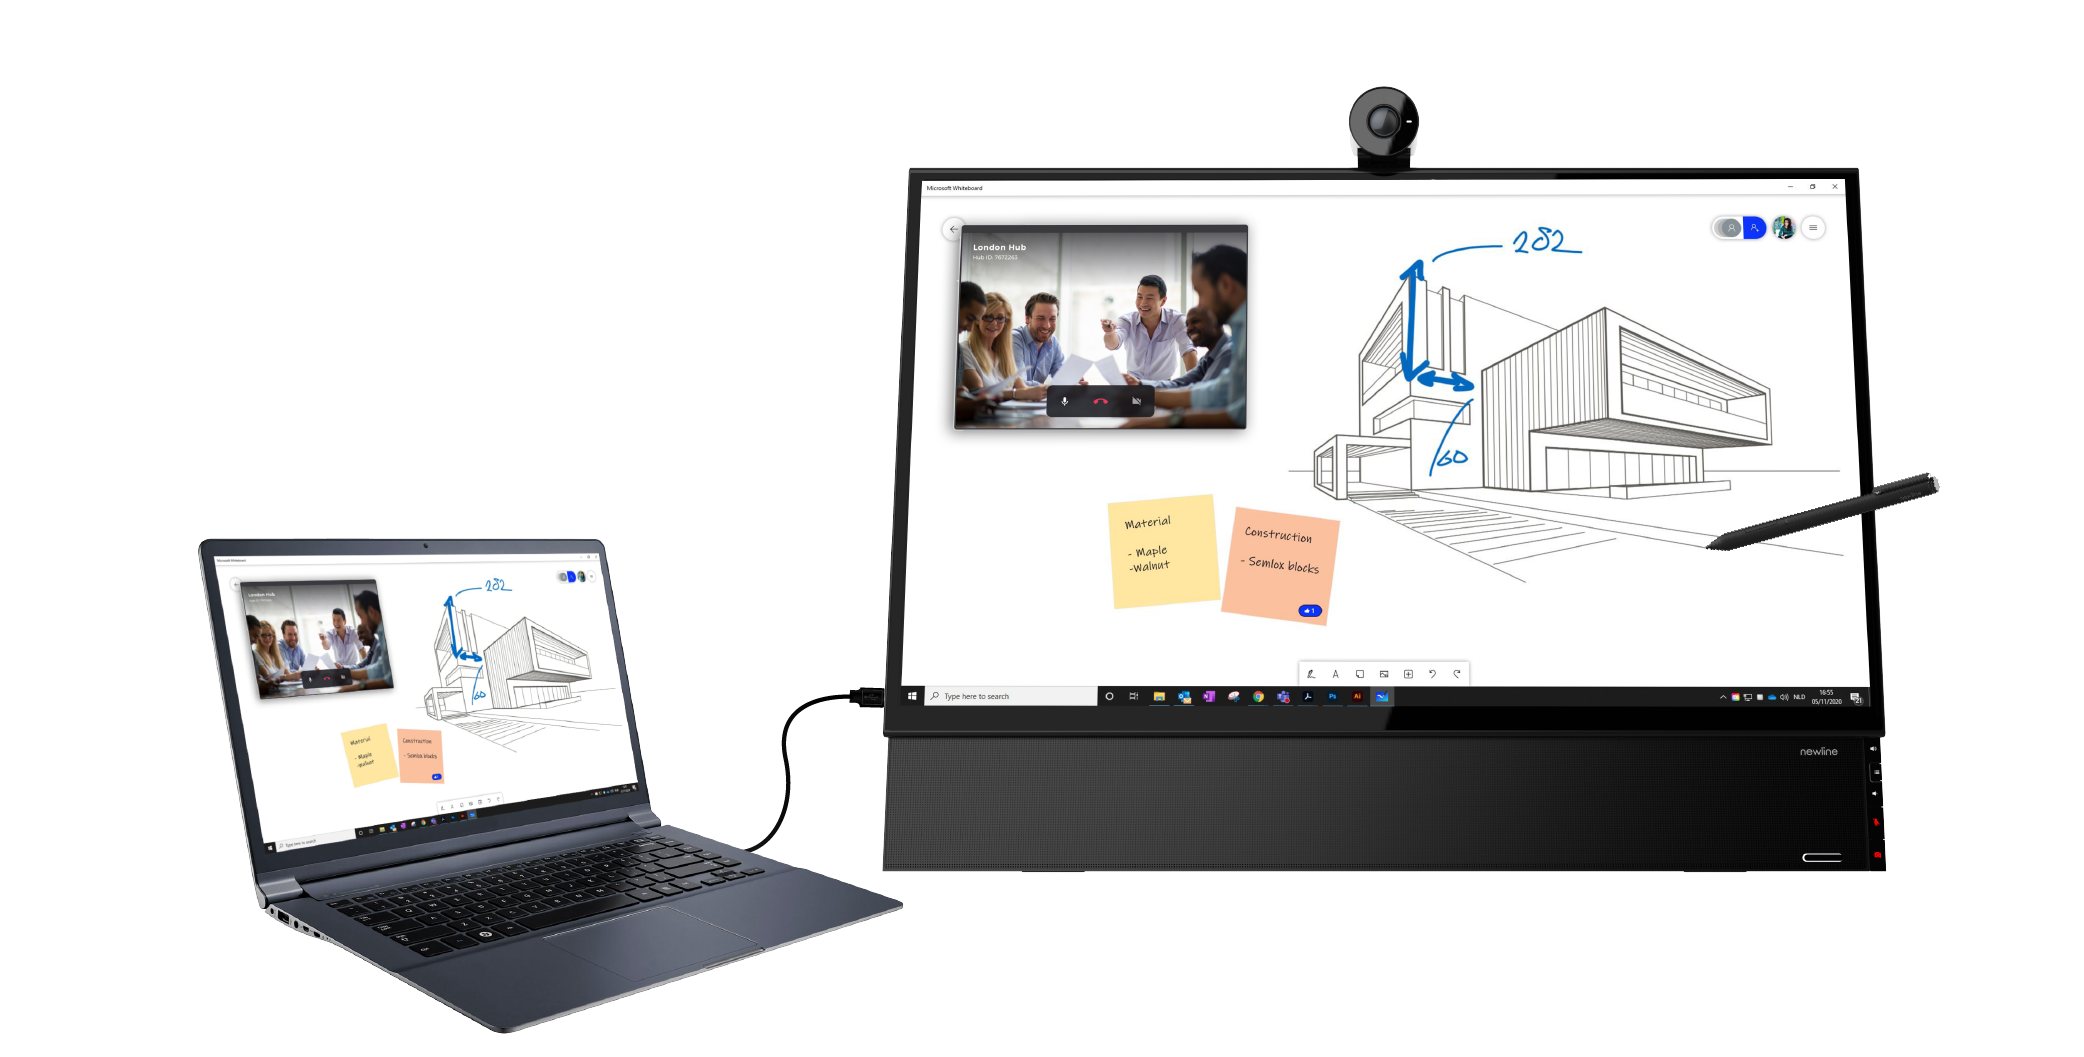 Newline Flex Collaboration Desktop (Official UAE Distributor)